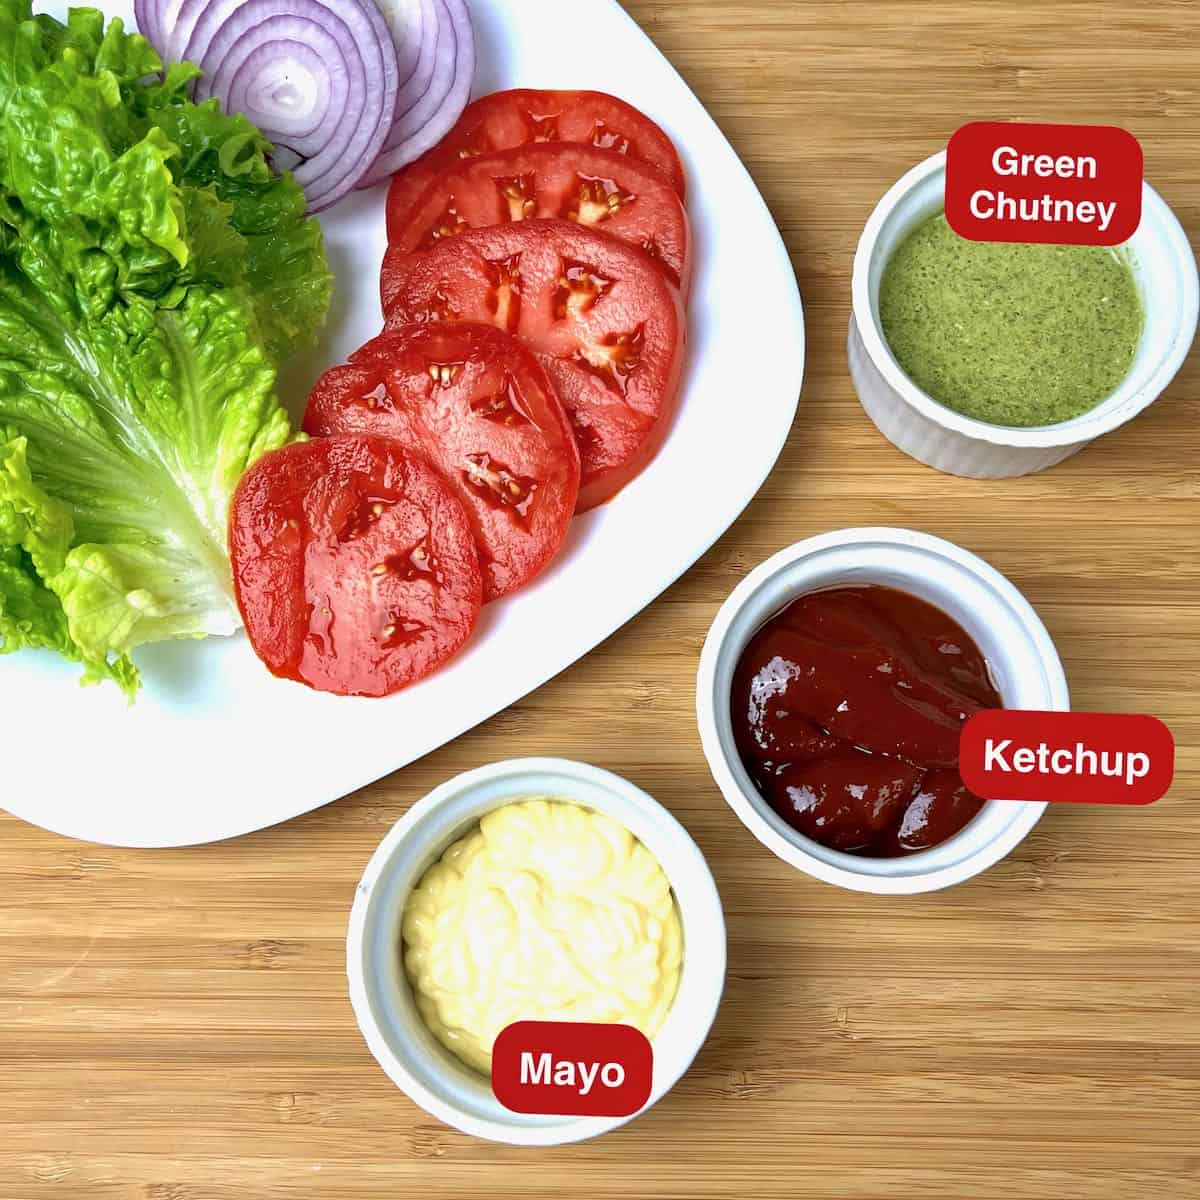 Air Fryer Turkey Burger garnish ideas: tomato, lettuce, onion, mayo, ketchup, and green chutney